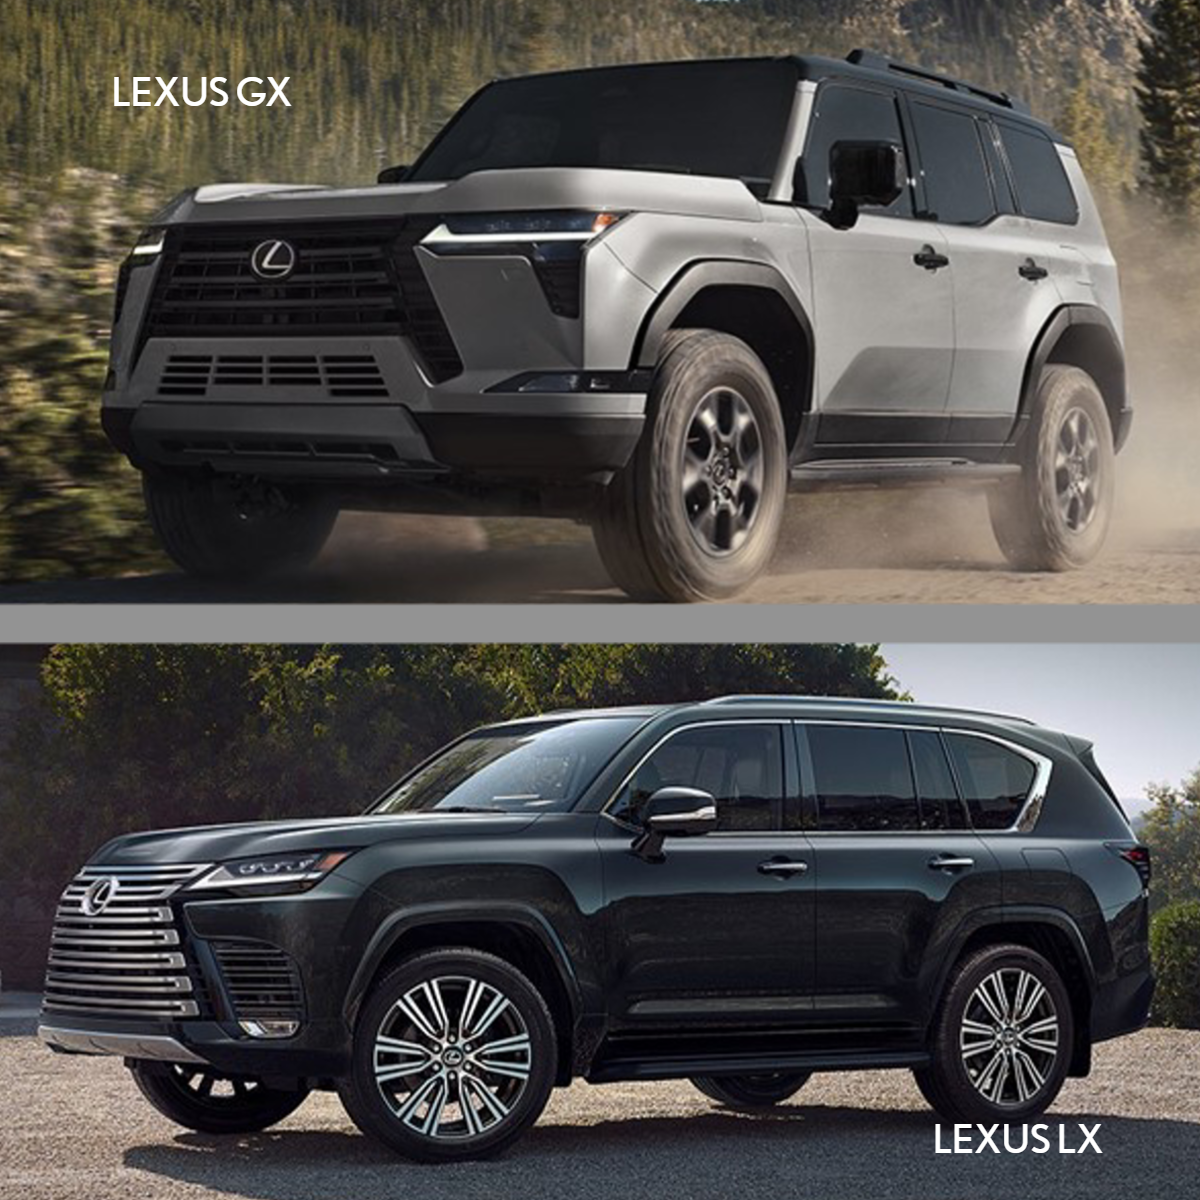 Lexus GX vs LX